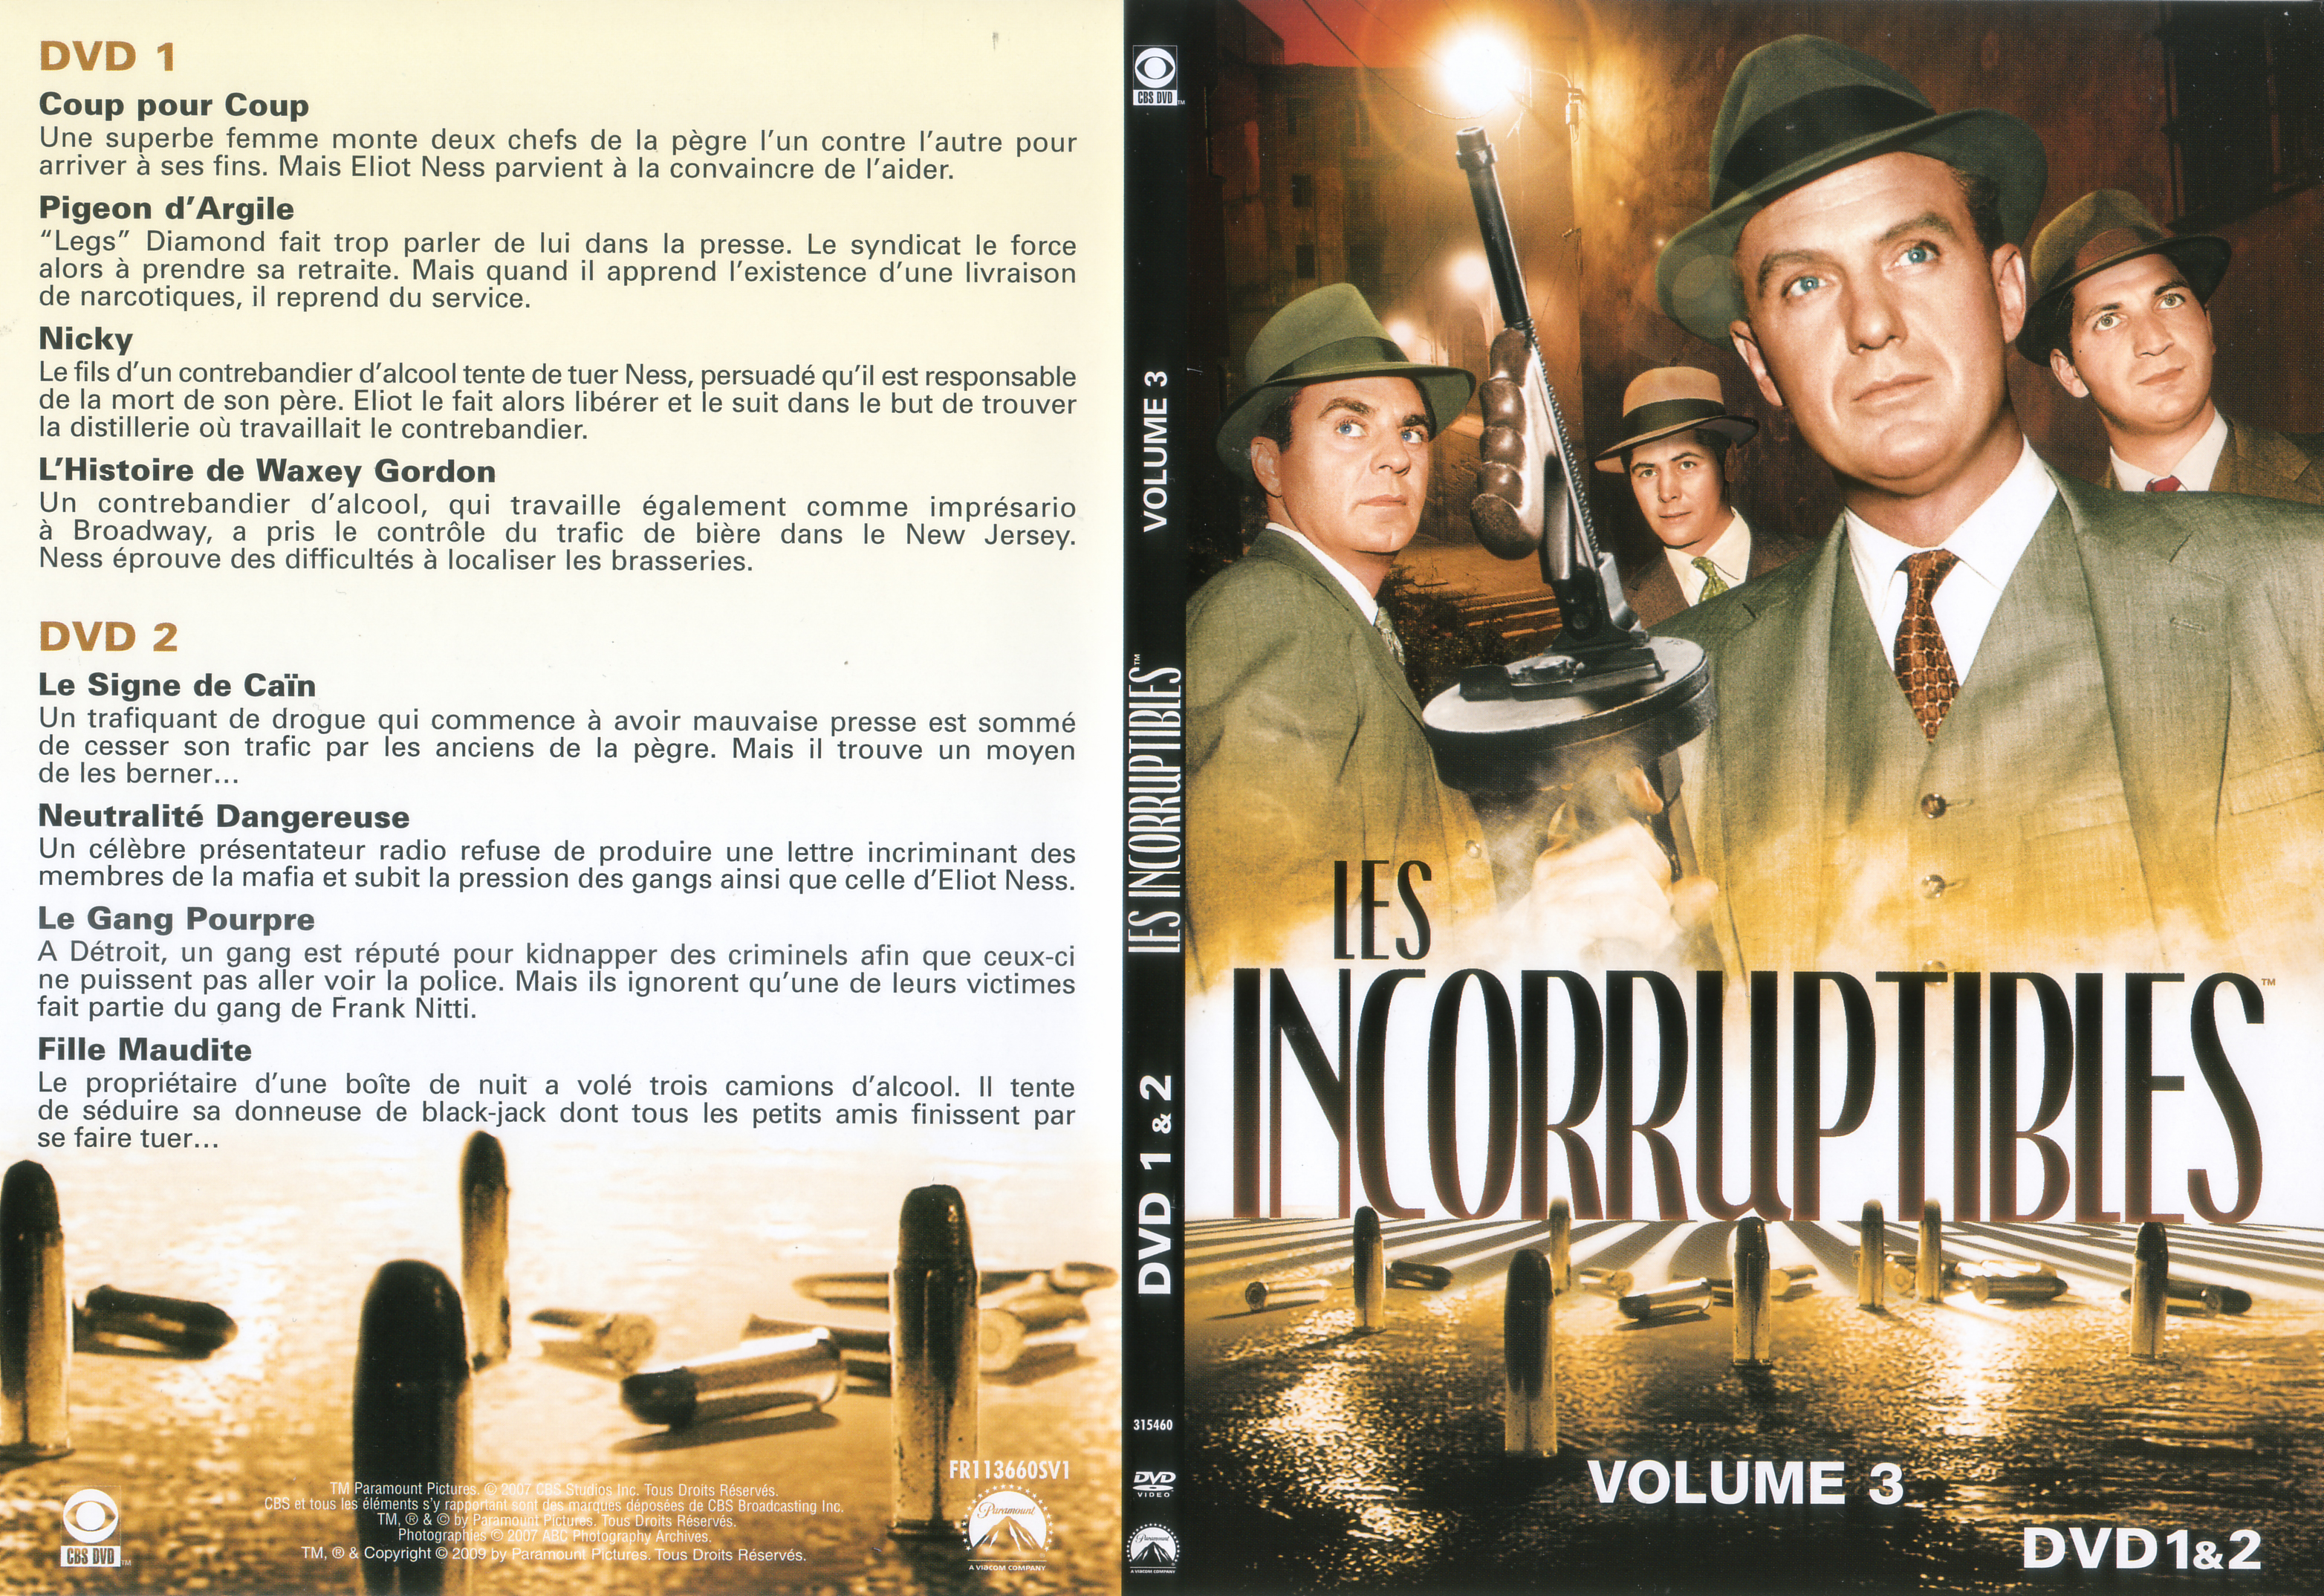 Jaquette DVD Les incorruptibles vol 03 DVD 1